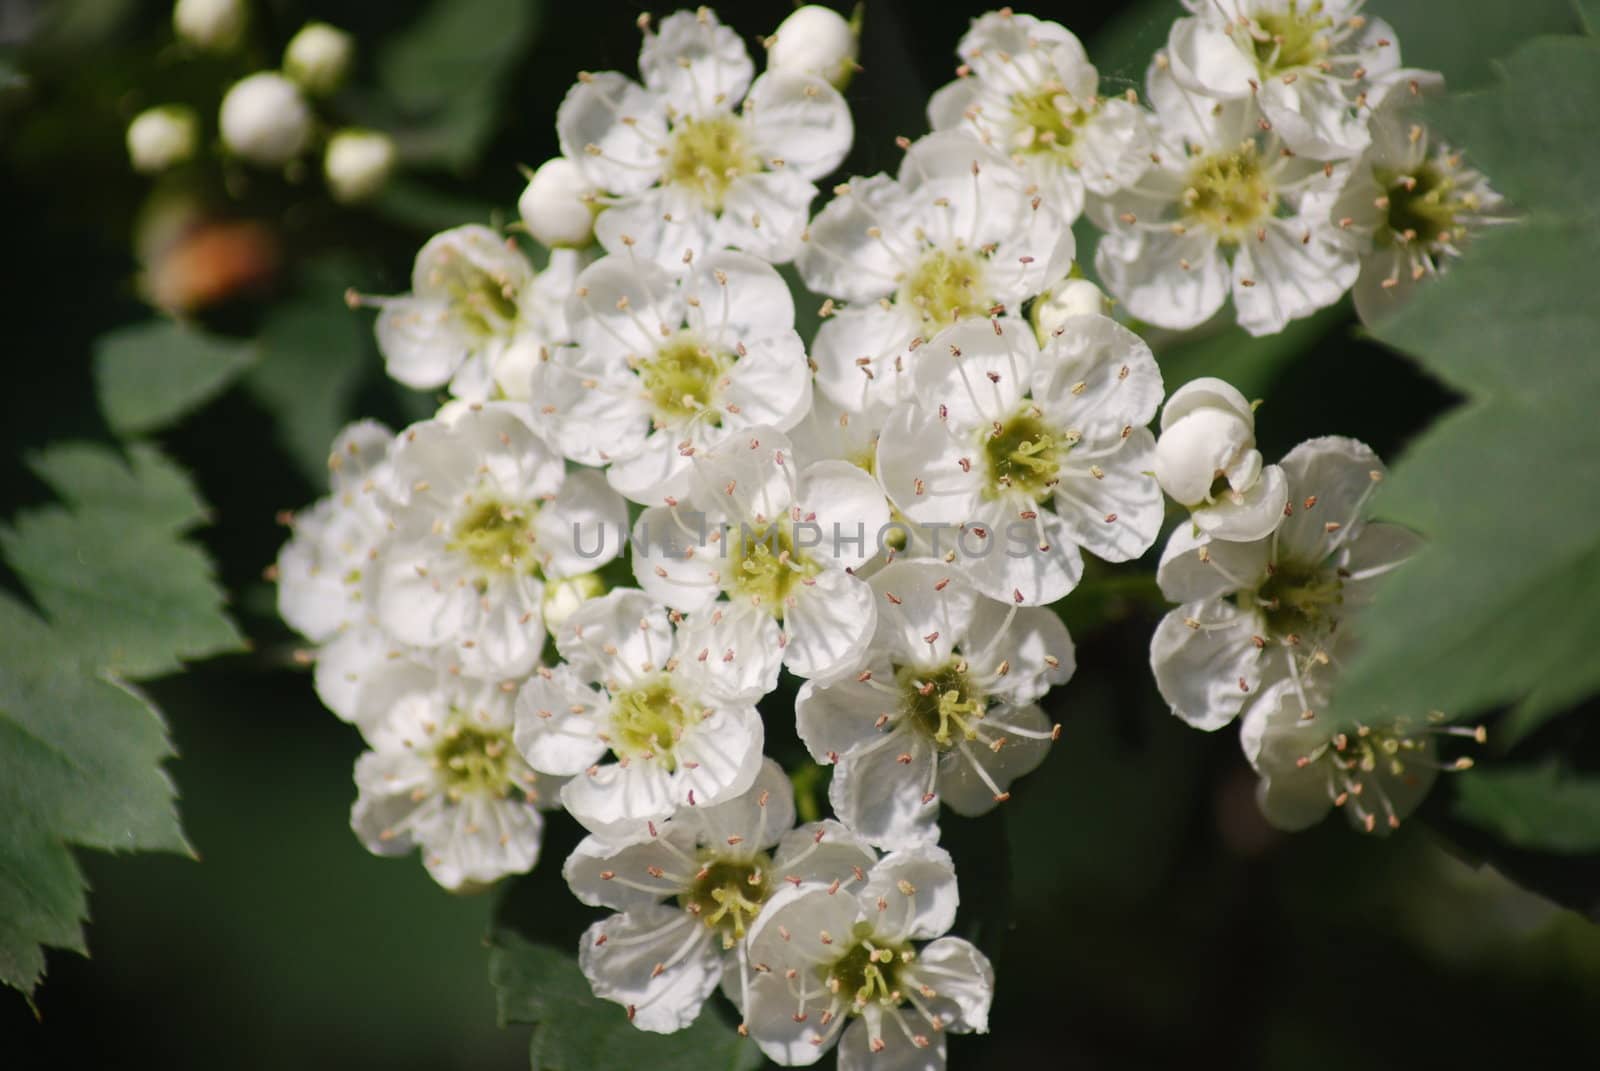 apple blossom close-up - white flowers by svtrotof